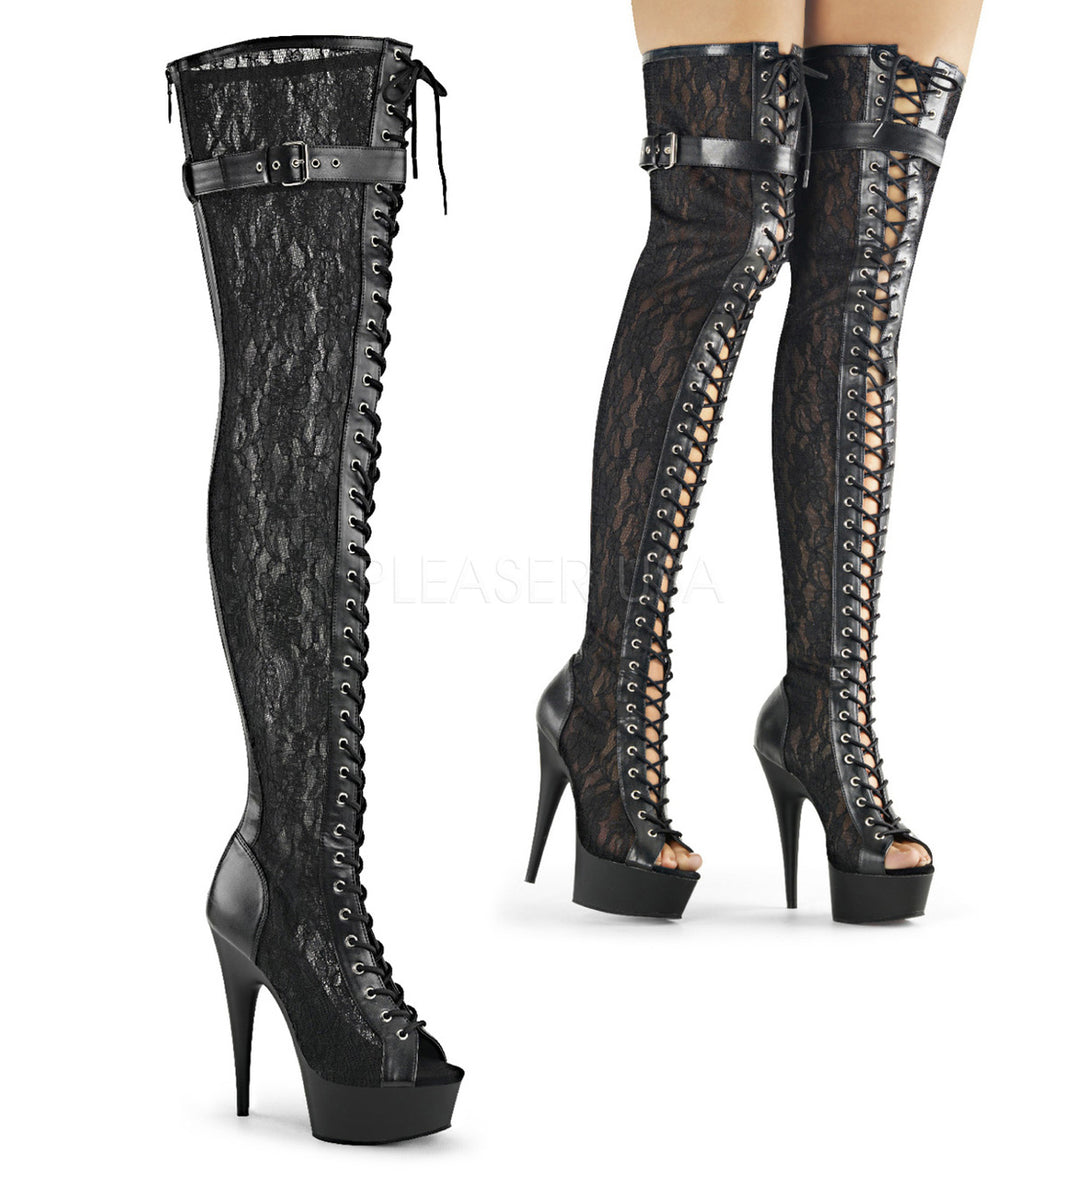 Women's 6" high heel black vegan leather exotic thigh high boots